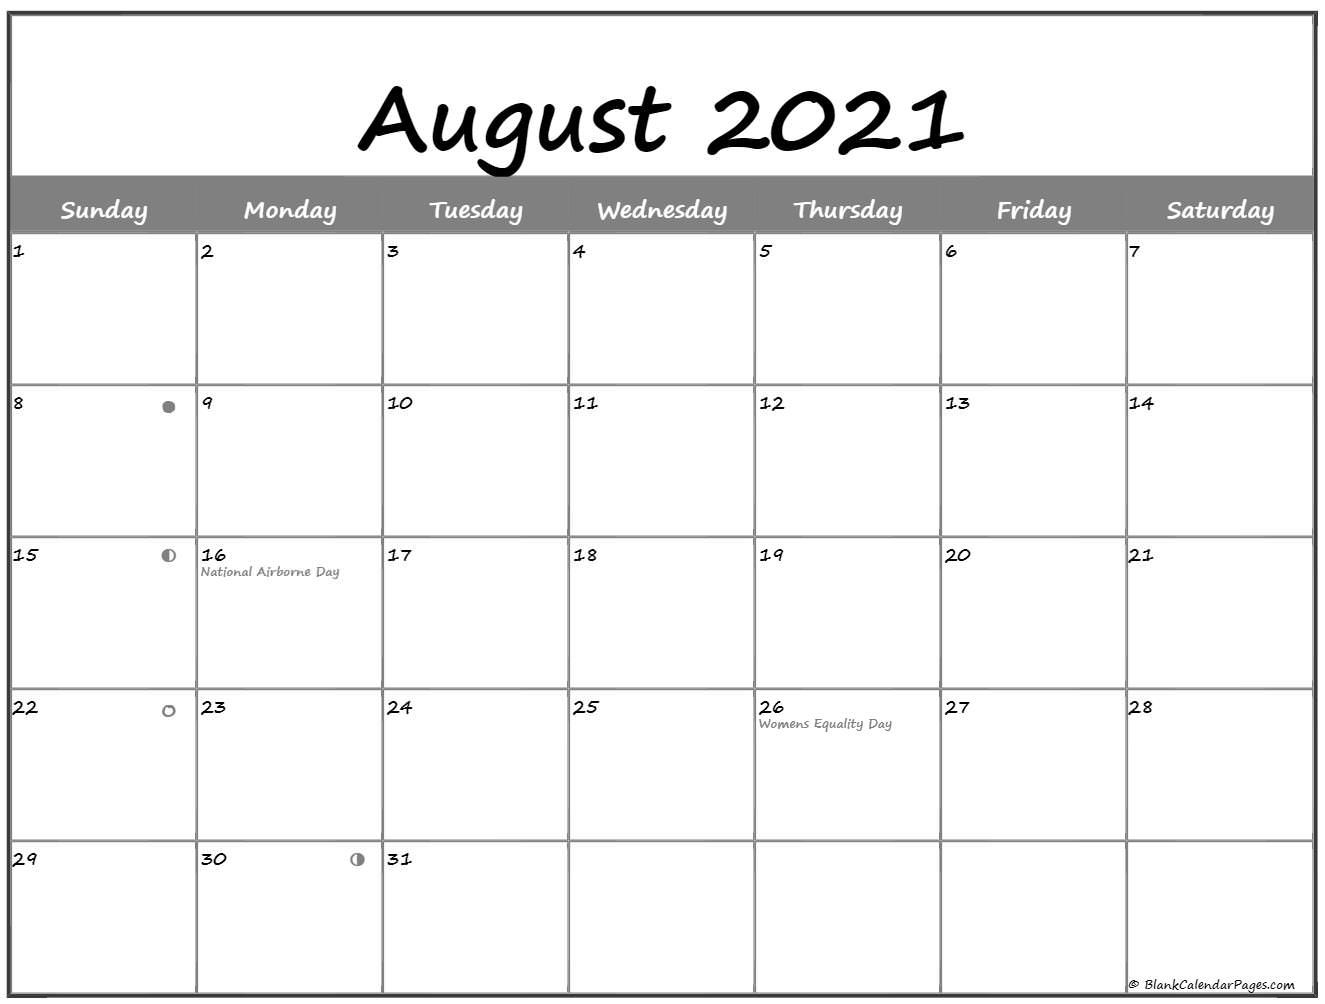 Lunar Calendar August 2021 | Printable March